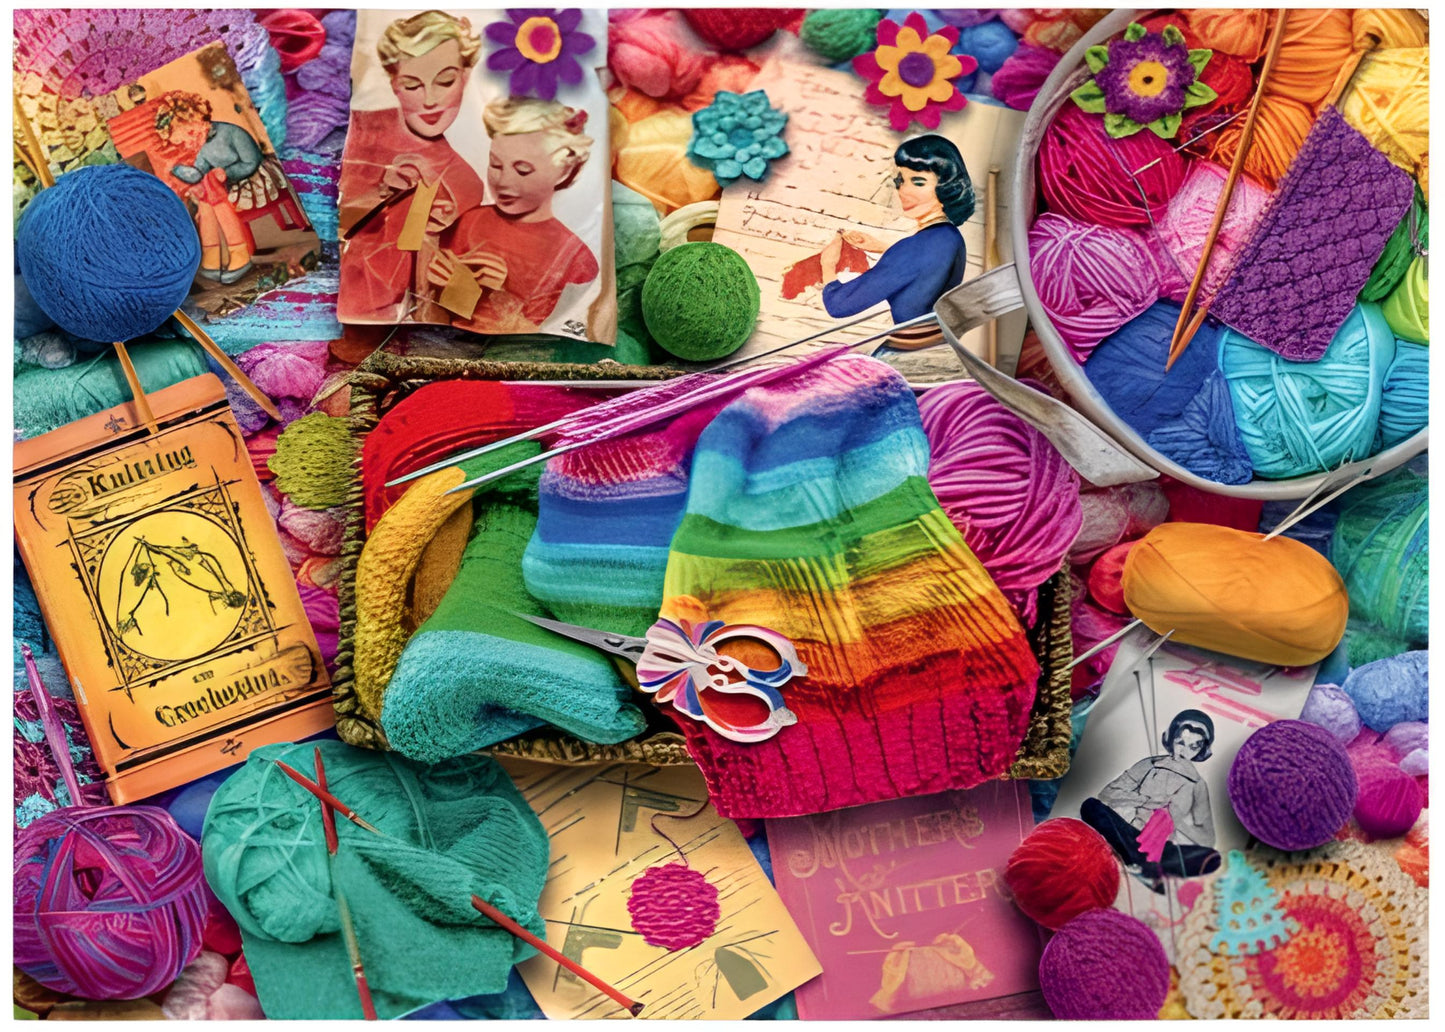 Ravensburger - Vintage Knitting & Crochet - 1000 Piece Jigsaw Puzzle